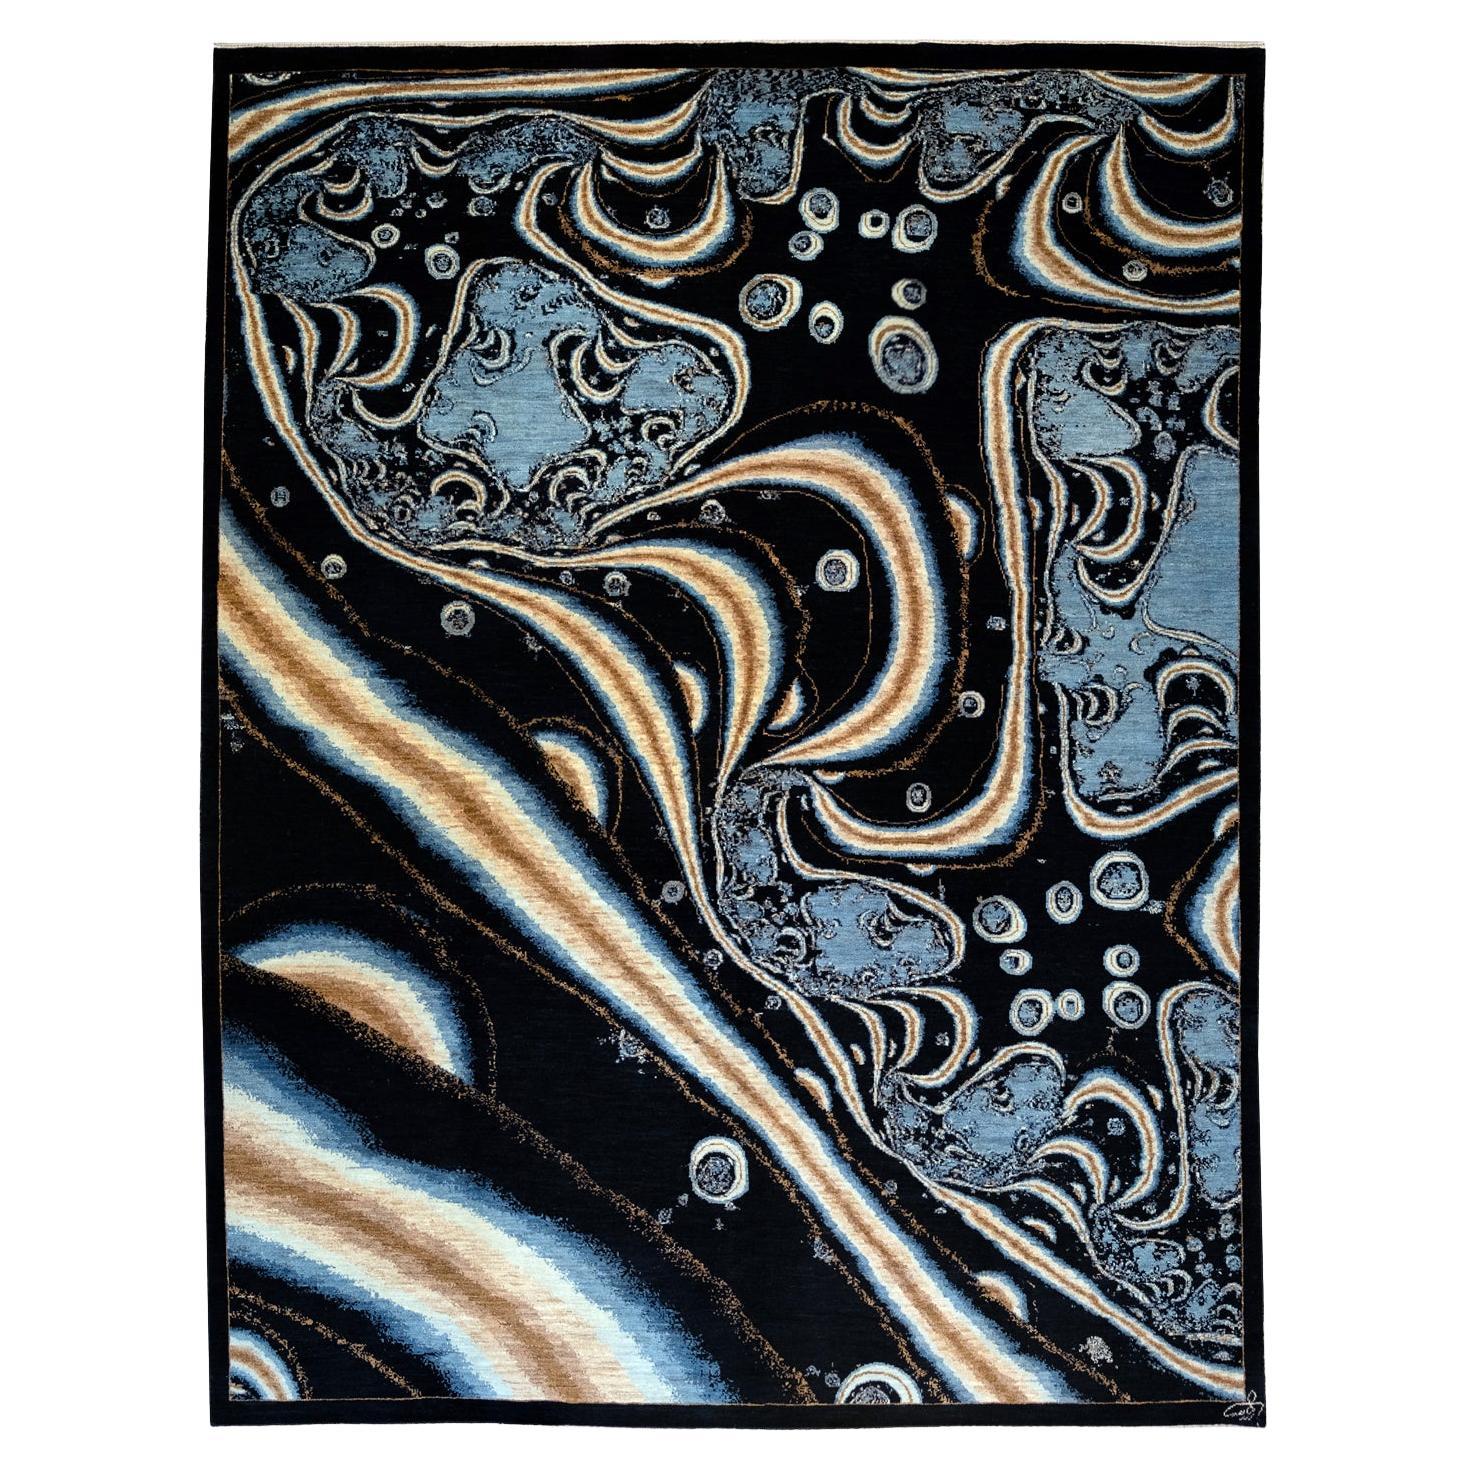 Orley Shabahang’s “Nebula” Contemporary Carpet in Indigo, Gold, and Cream